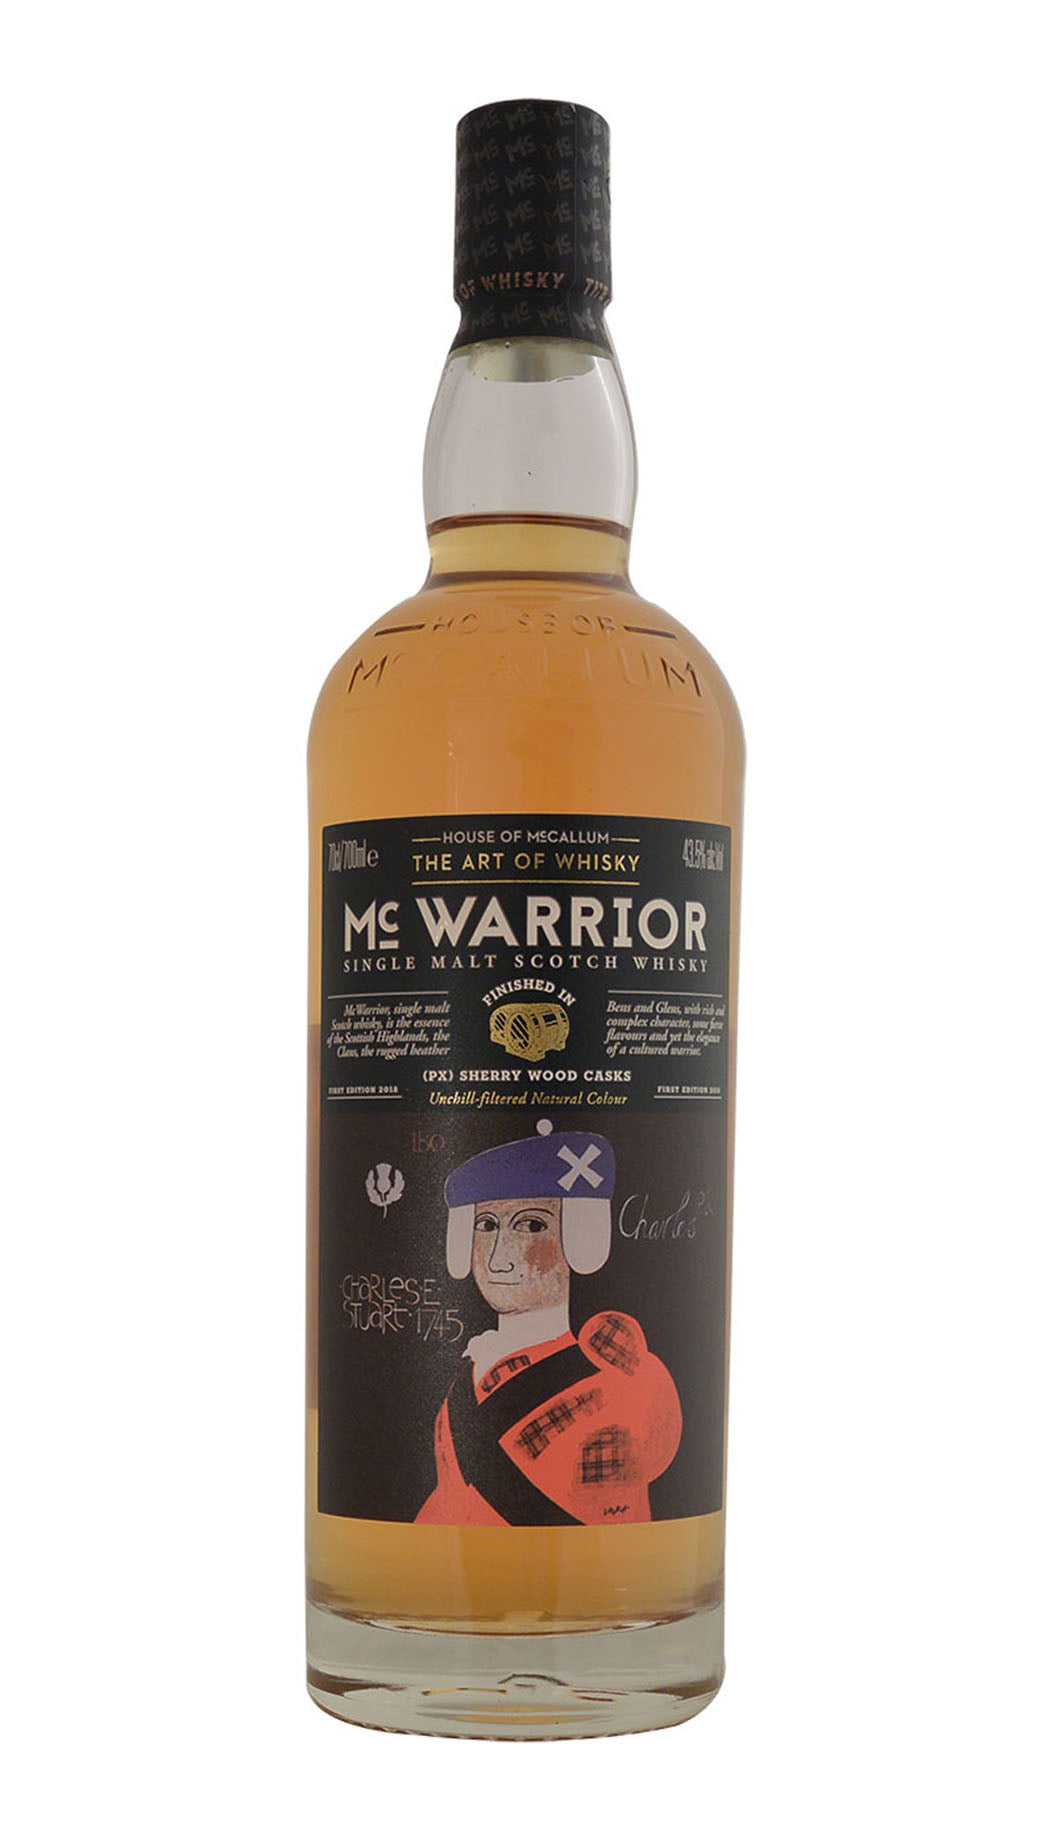 The Art of Whisky Mc Warrior  Sherry Wood Casks (PX) House of McCallum